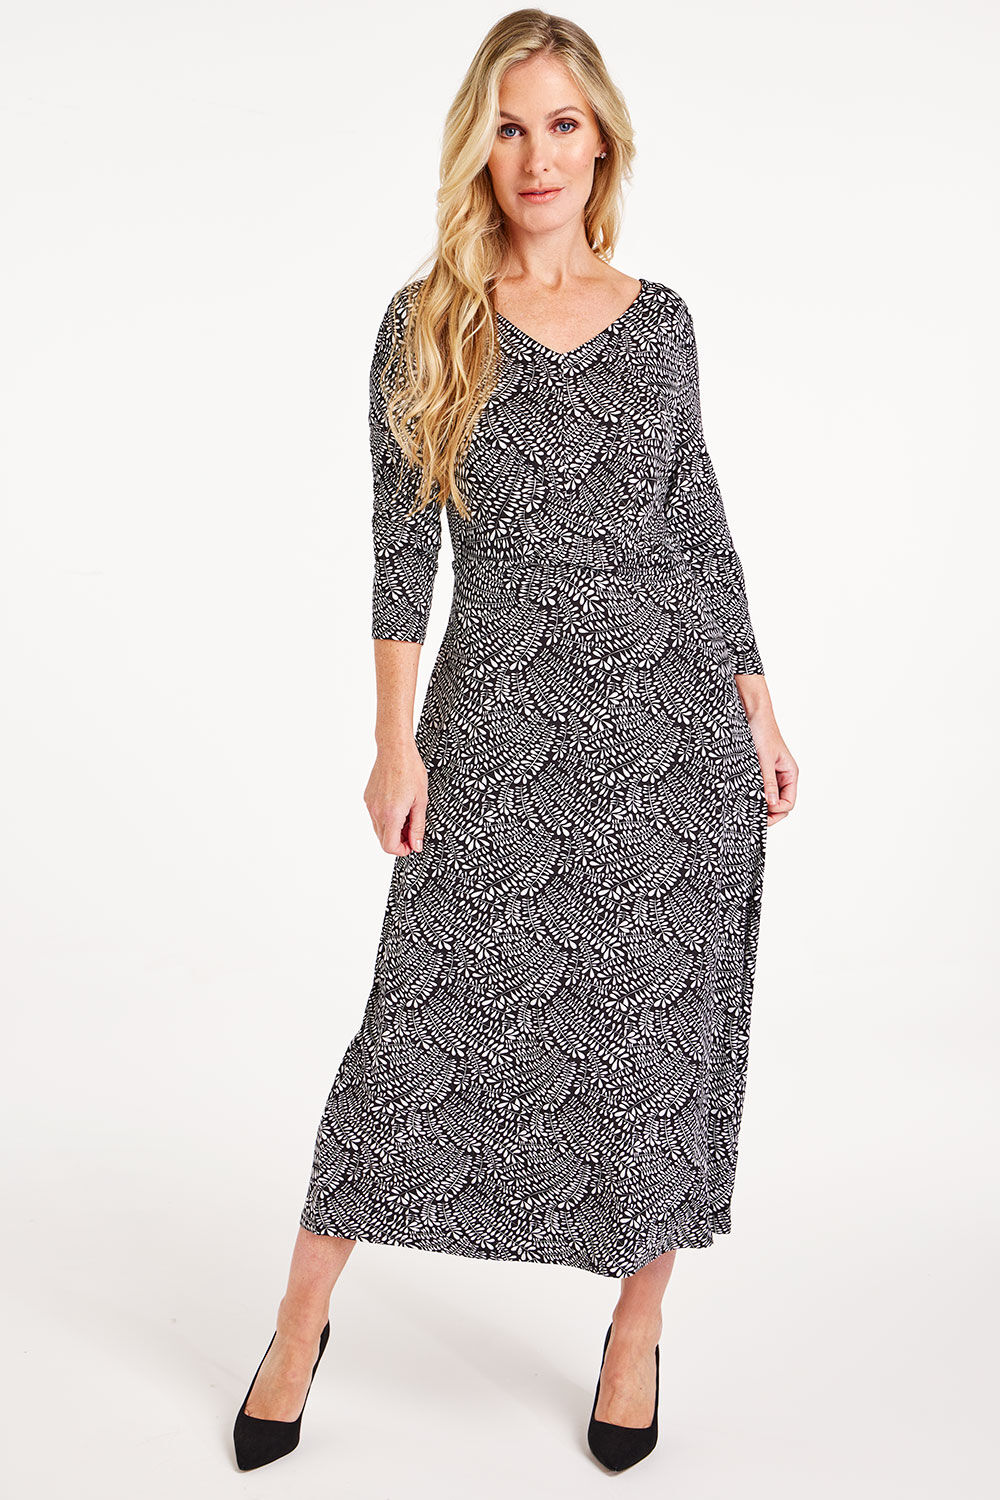 Bonmarche Women’s Black and White Viscose Leaf Print Sprig Twist Front Jersey Dress, Size: 14